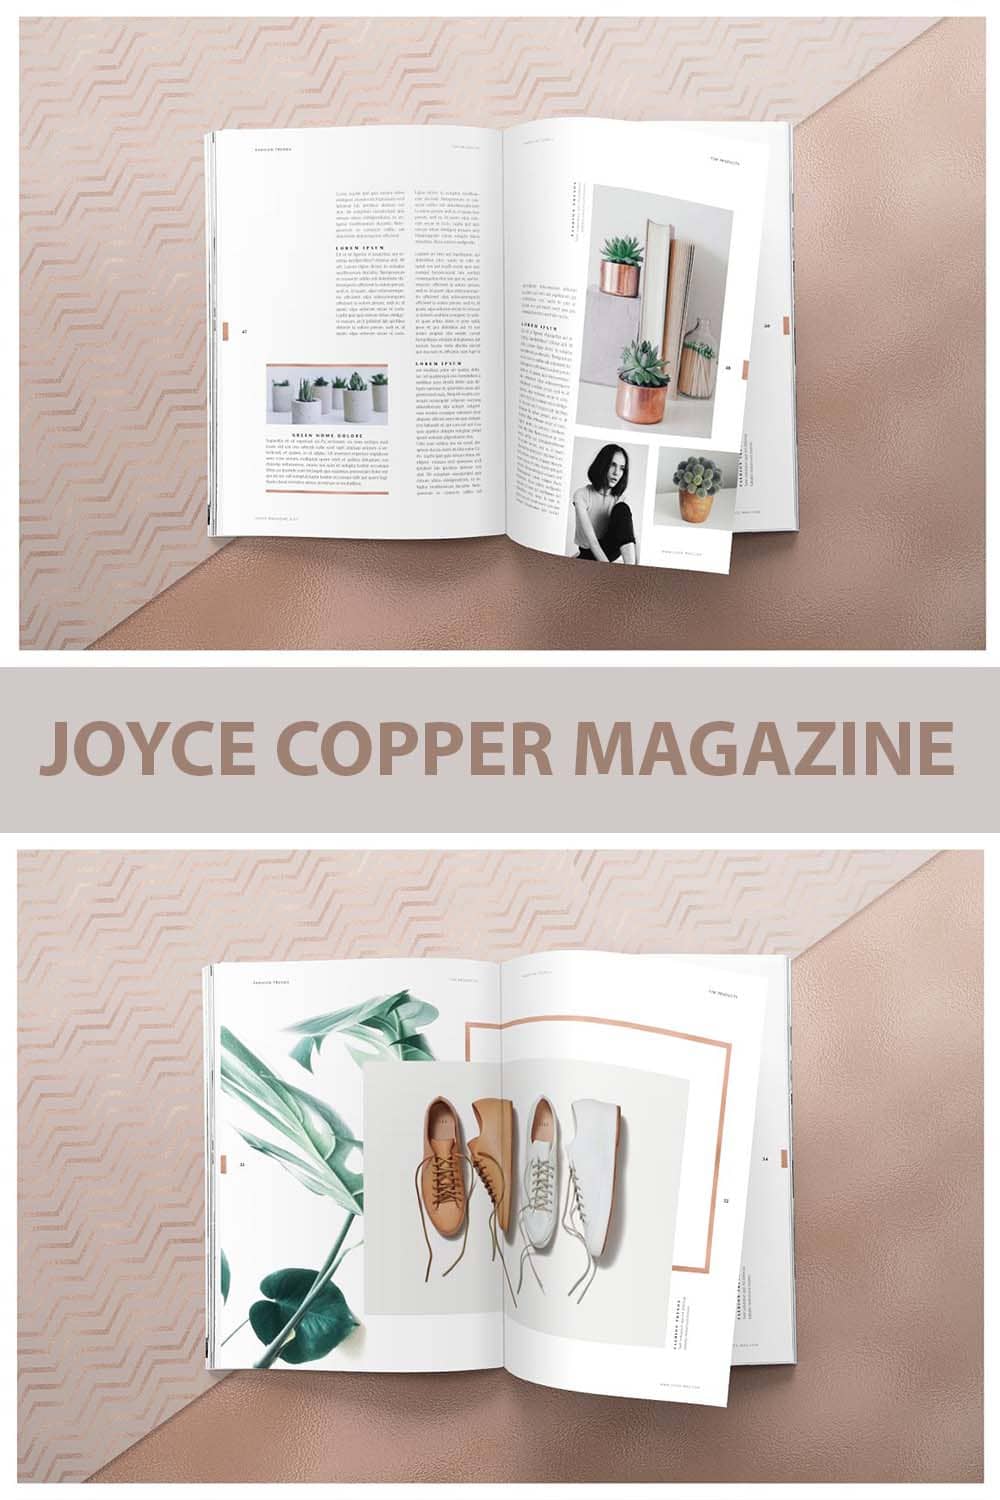 joyce copper magazine pinterest image.